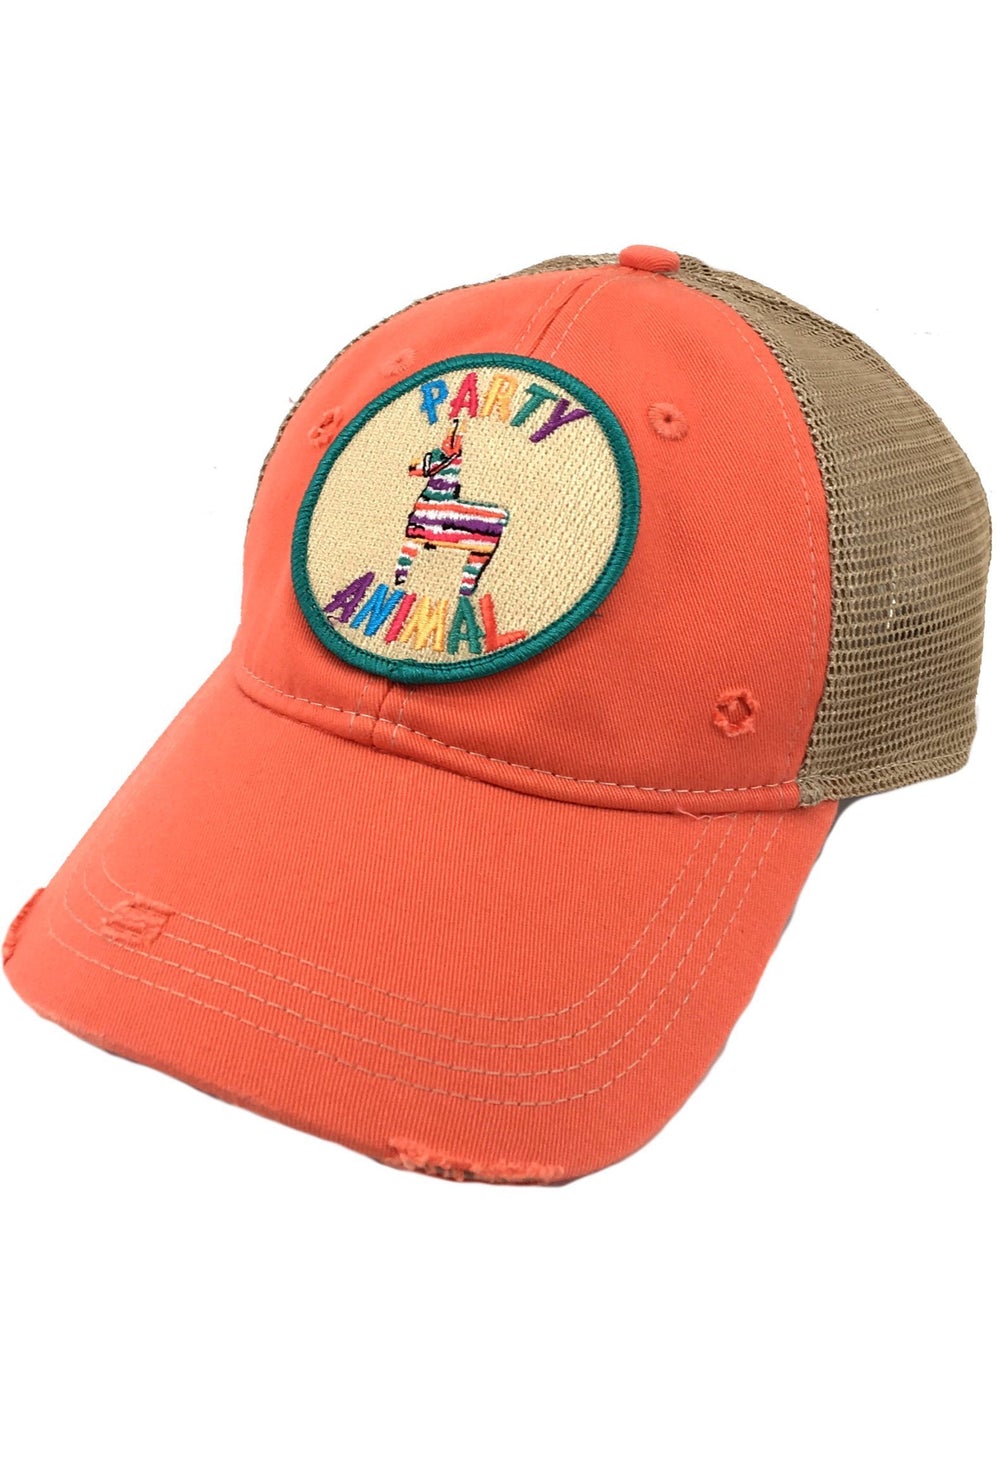 Party Animal Baseball Hat